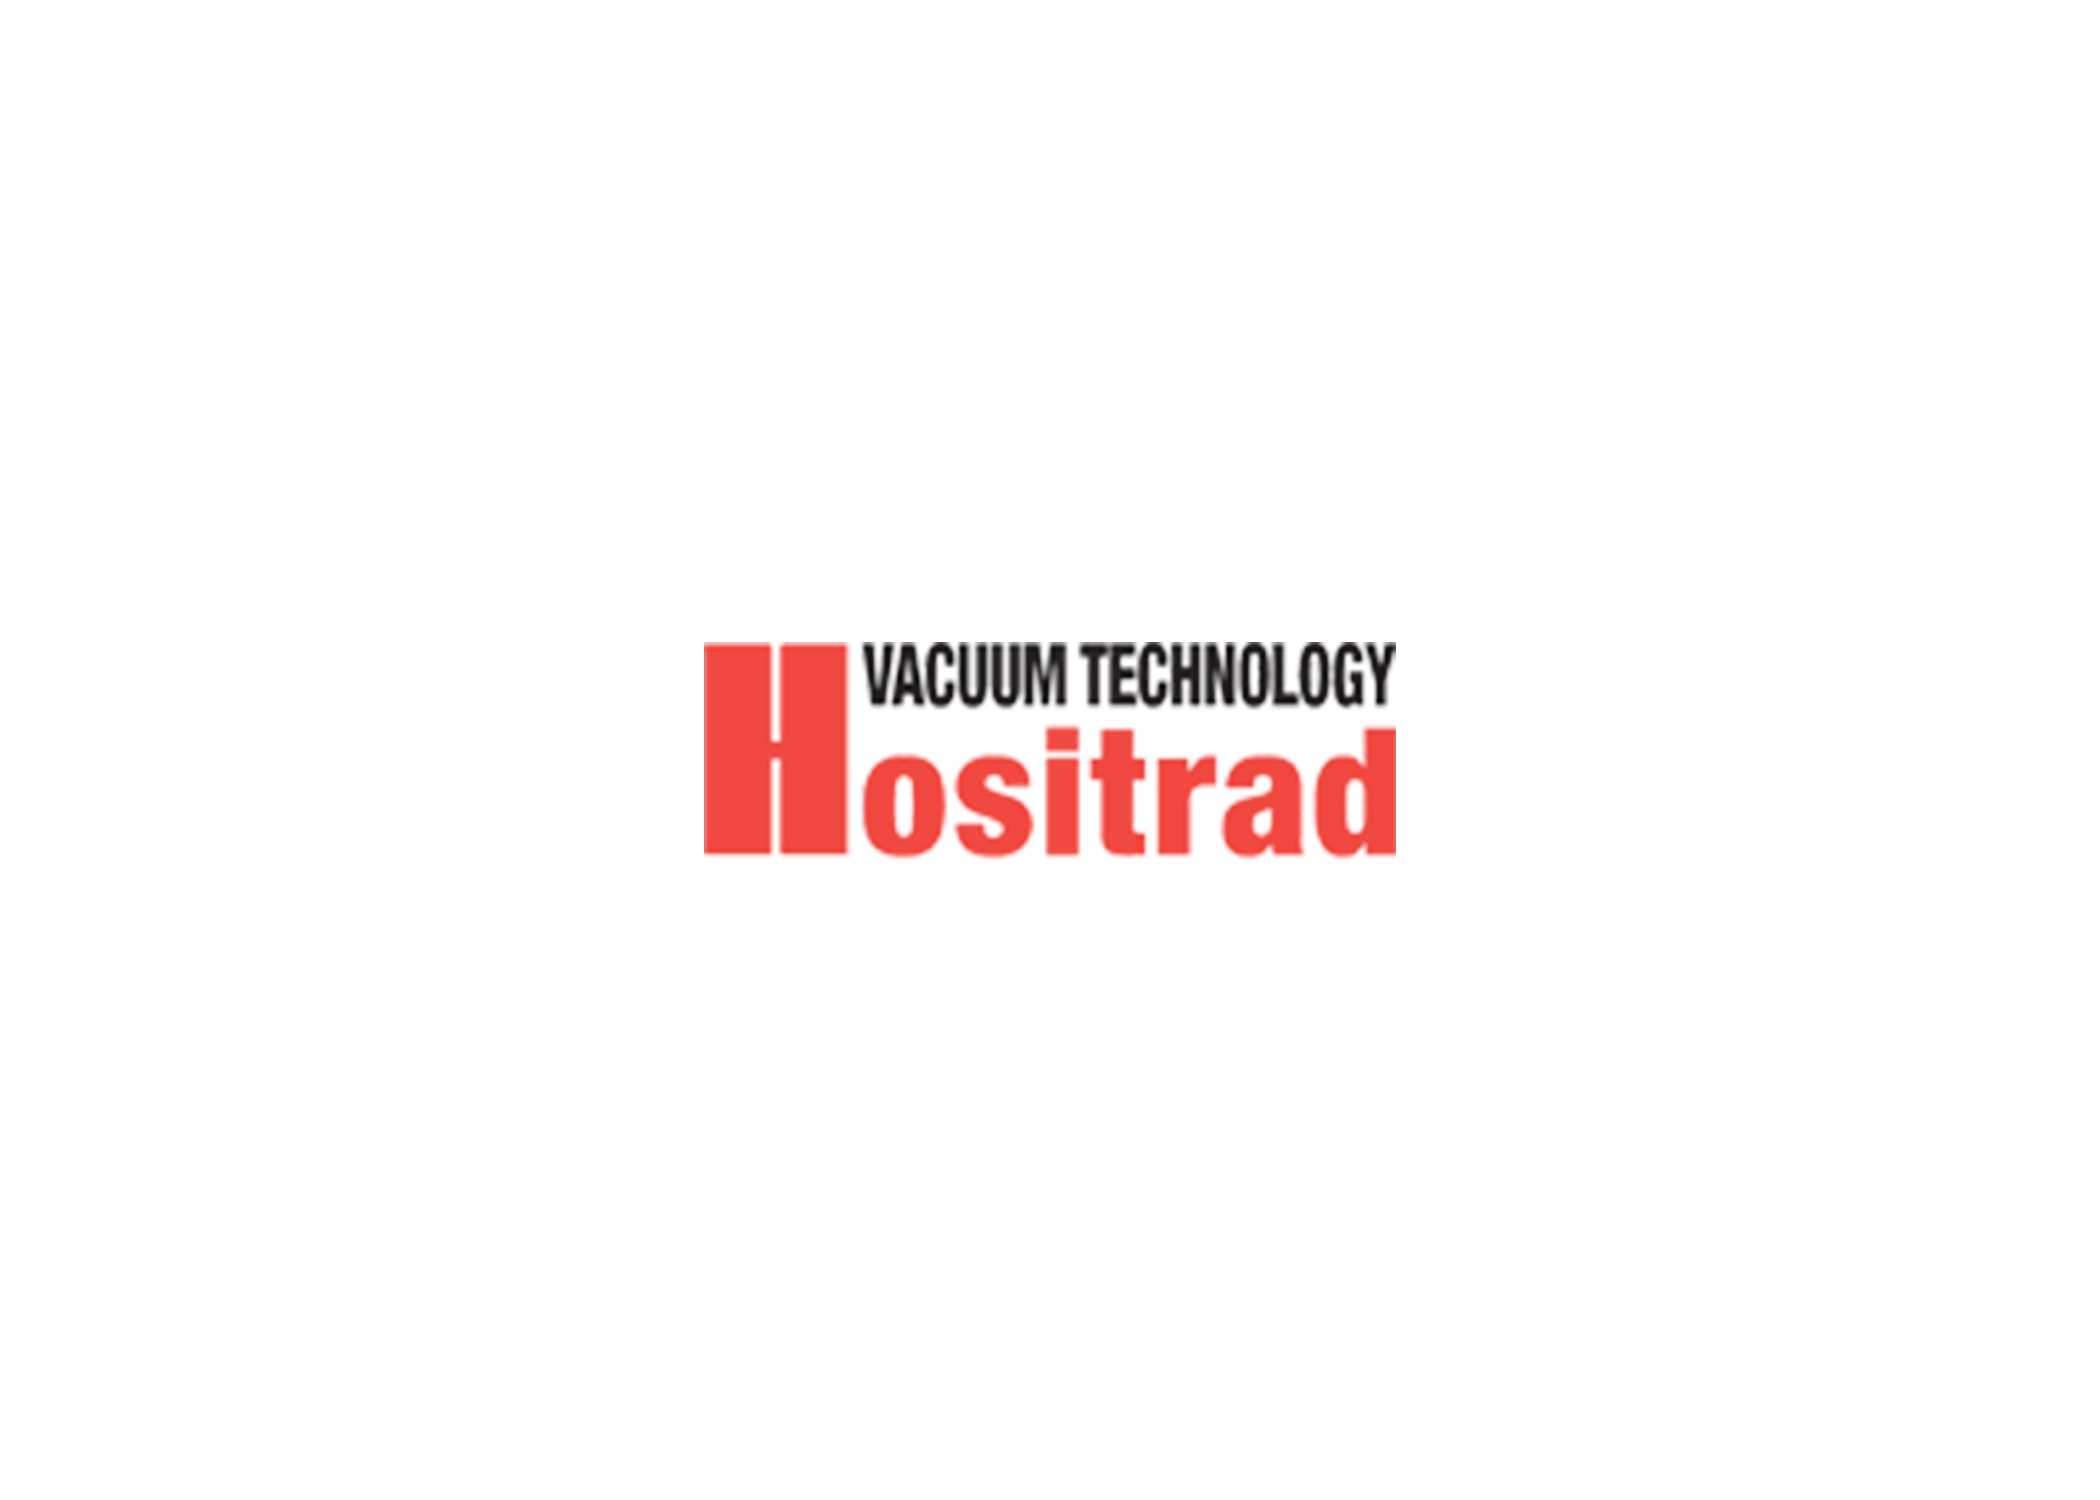 Hositrad Vacuum Technology logo